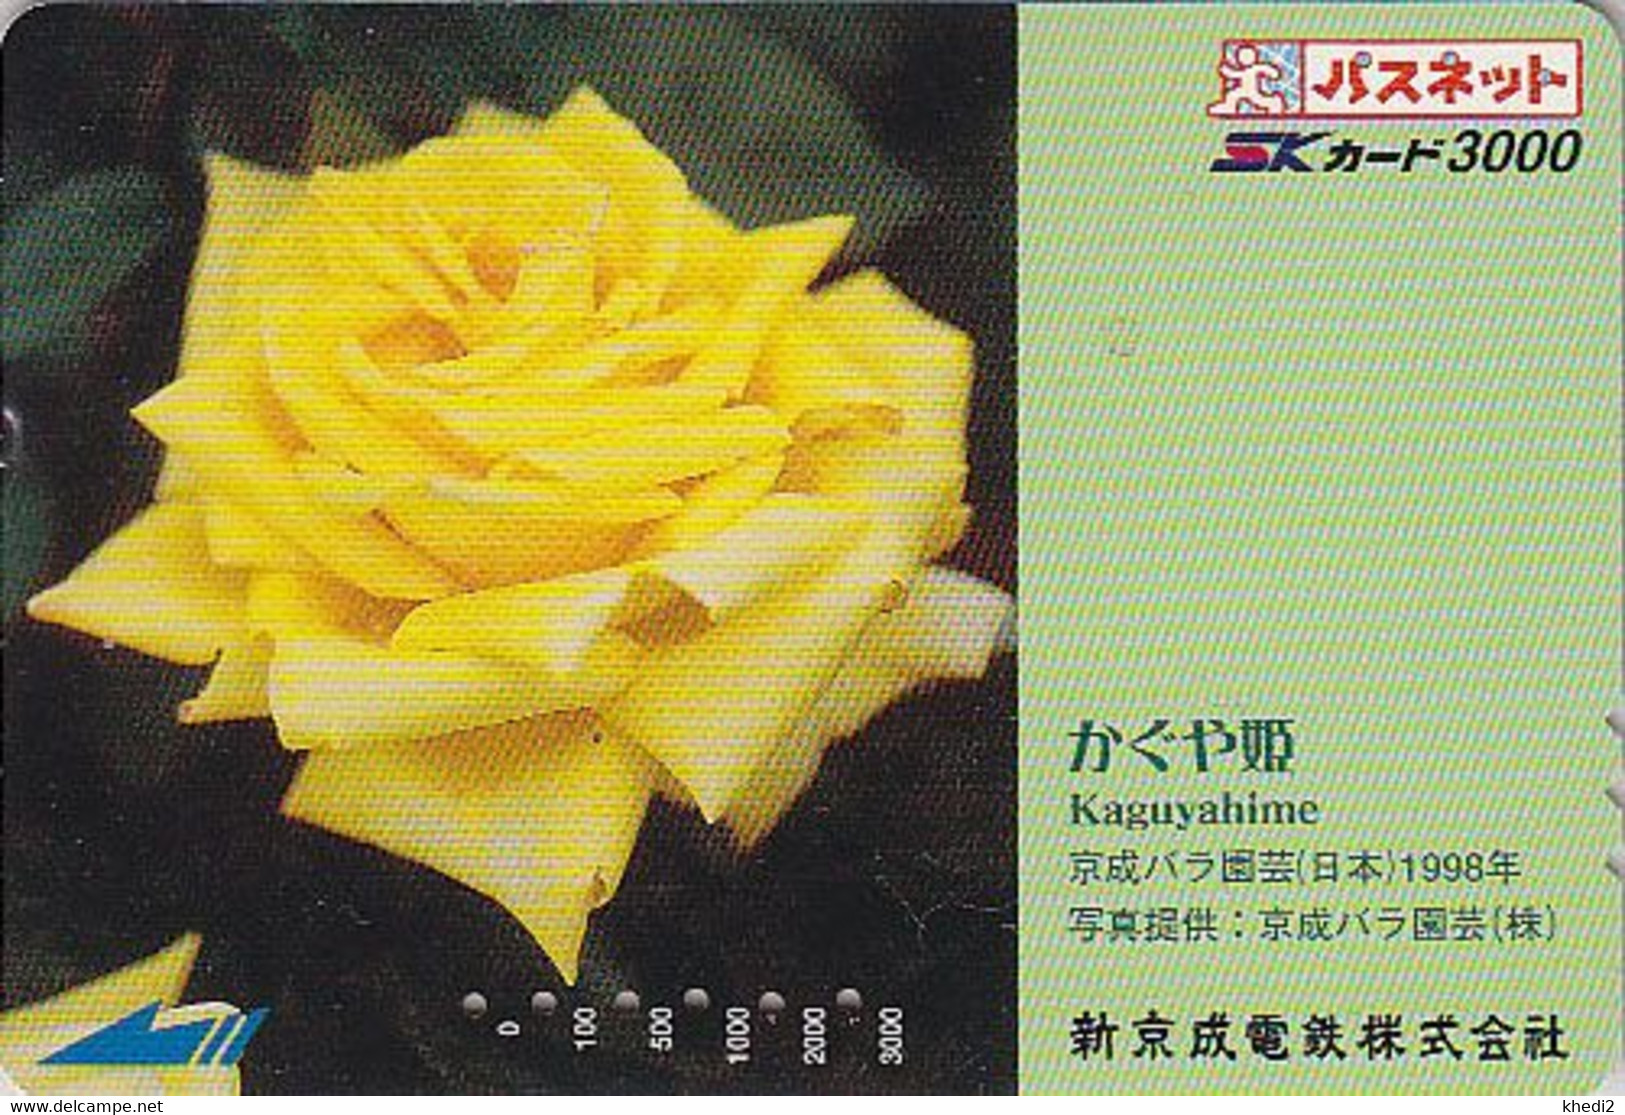 Carte Prépayée JAPON - FLEUR ROSE / SERIE CULTIVAR ** Kaguyahime ** - FLOWER  JAPAN Prepaid SK Line Card - Blume  - 566 - Japon